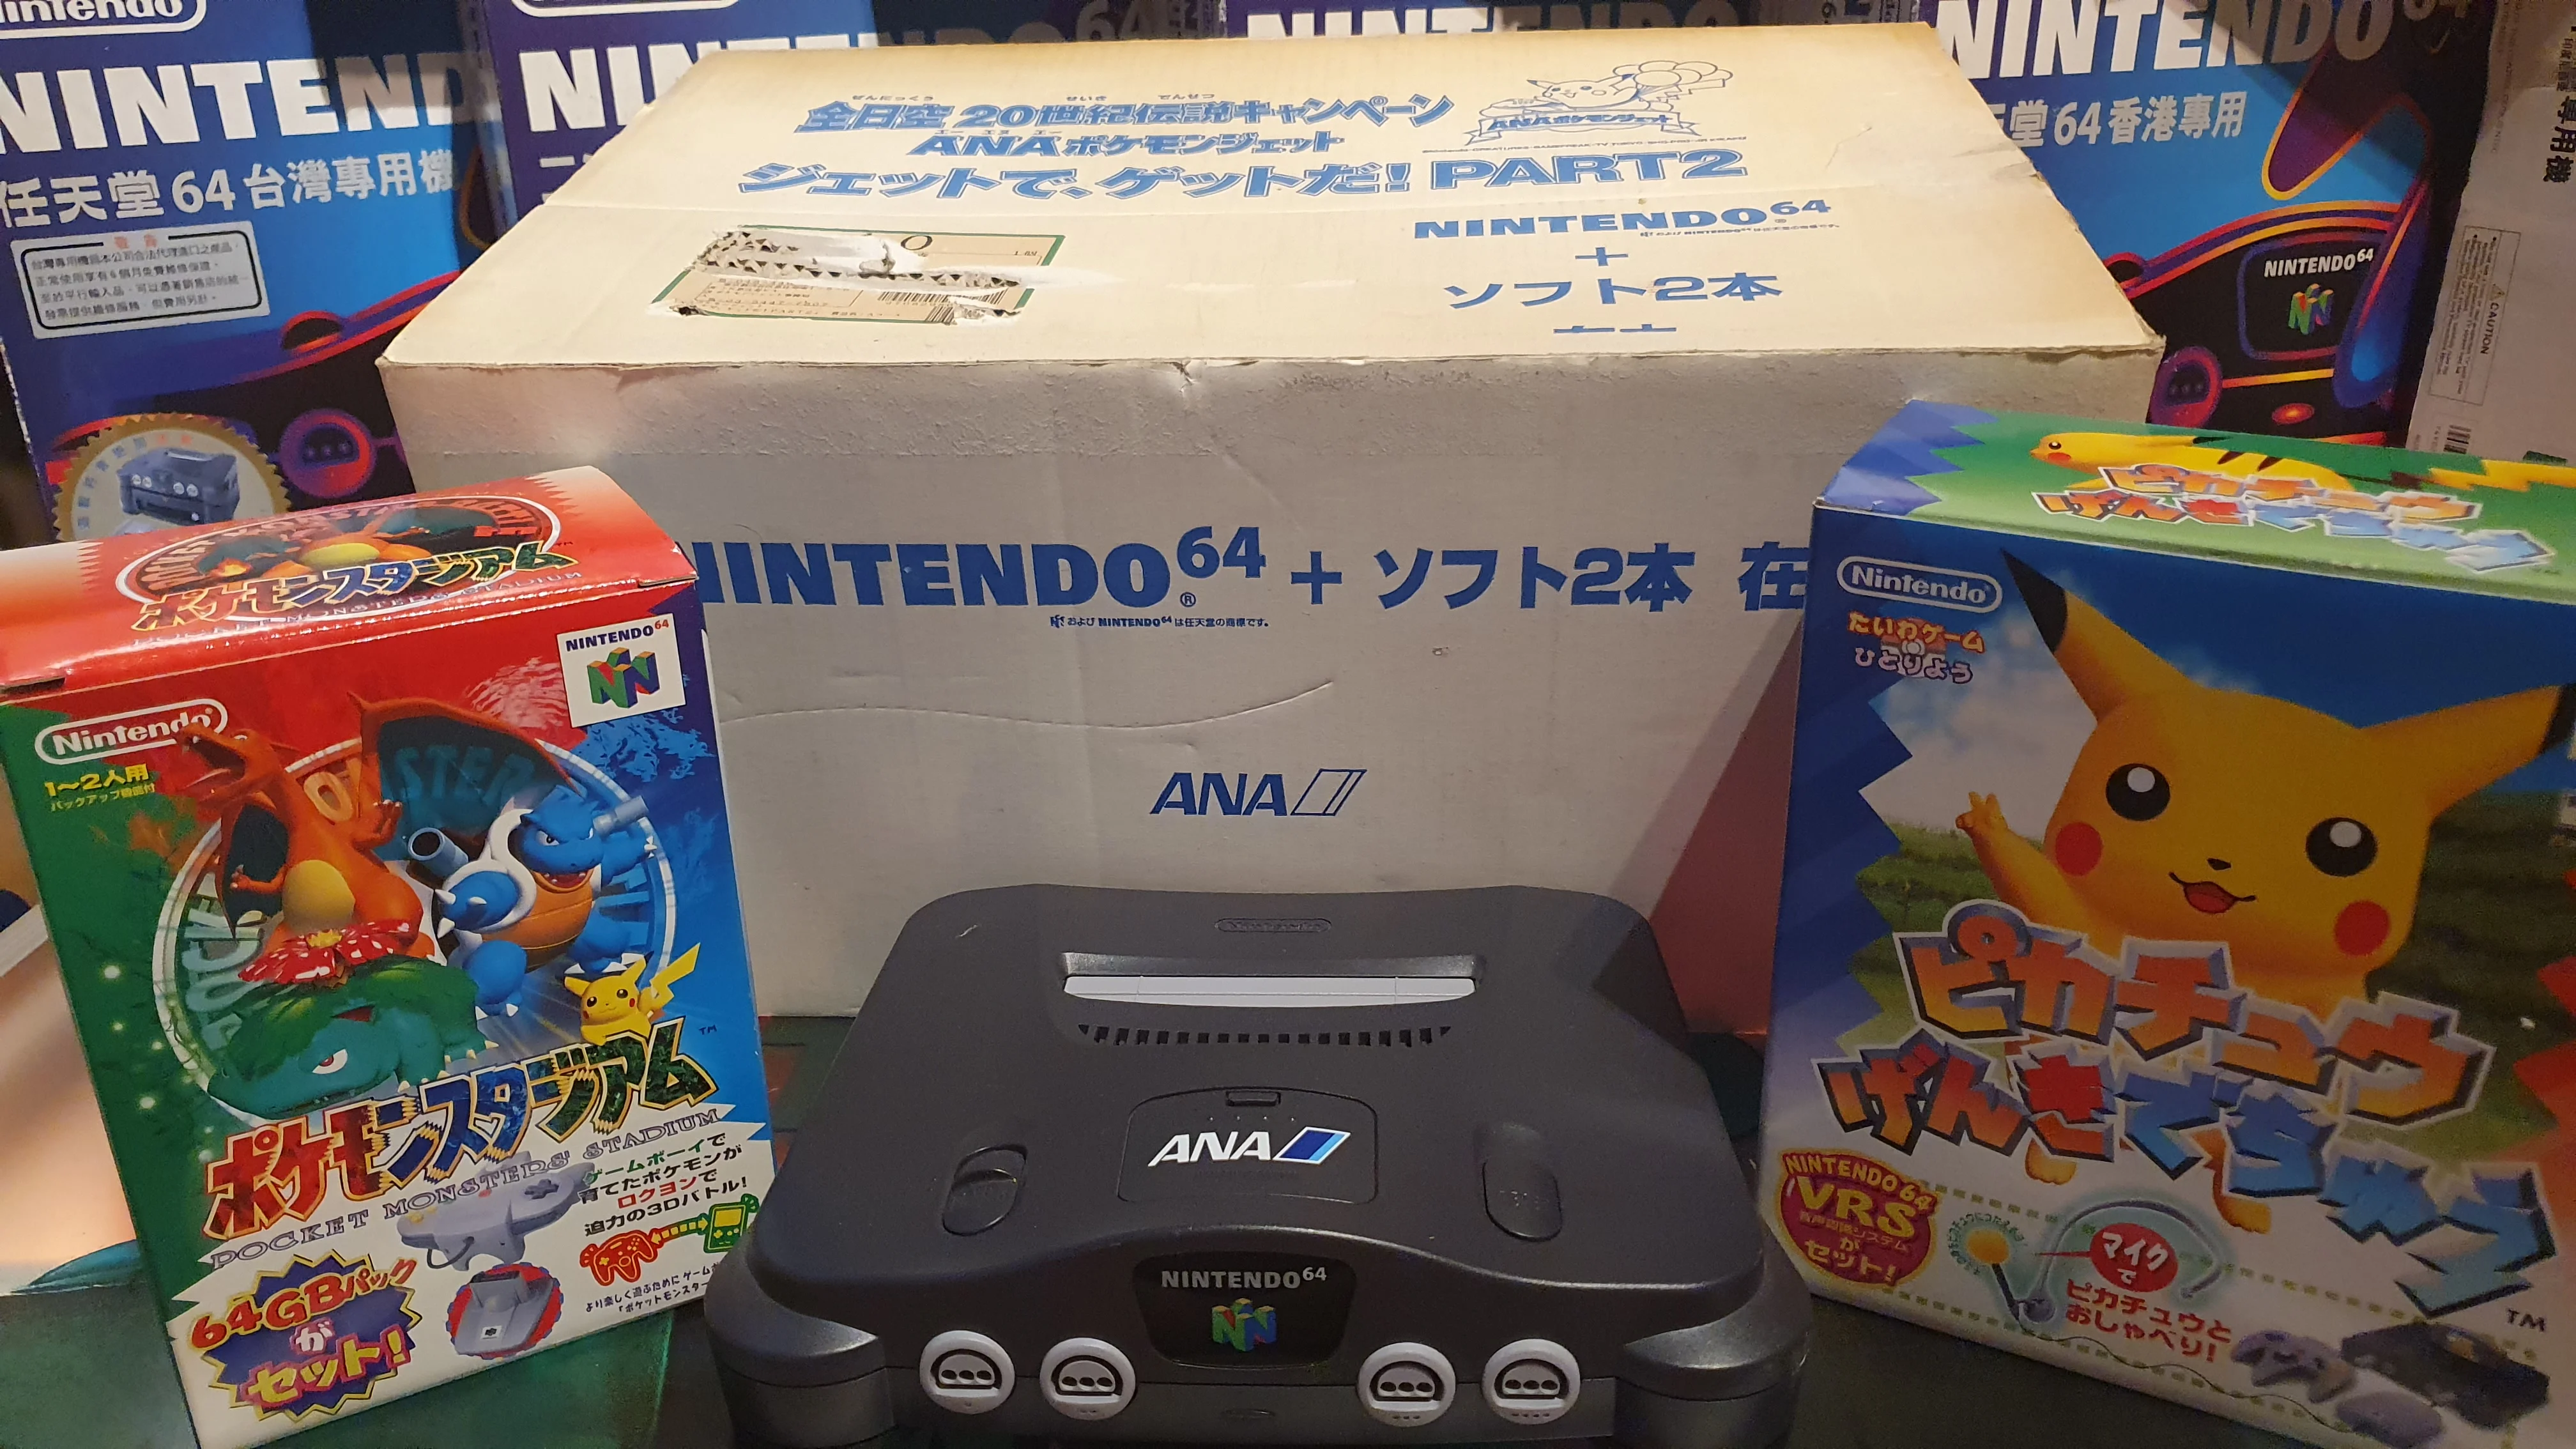  Nintendo 64 ANA Console